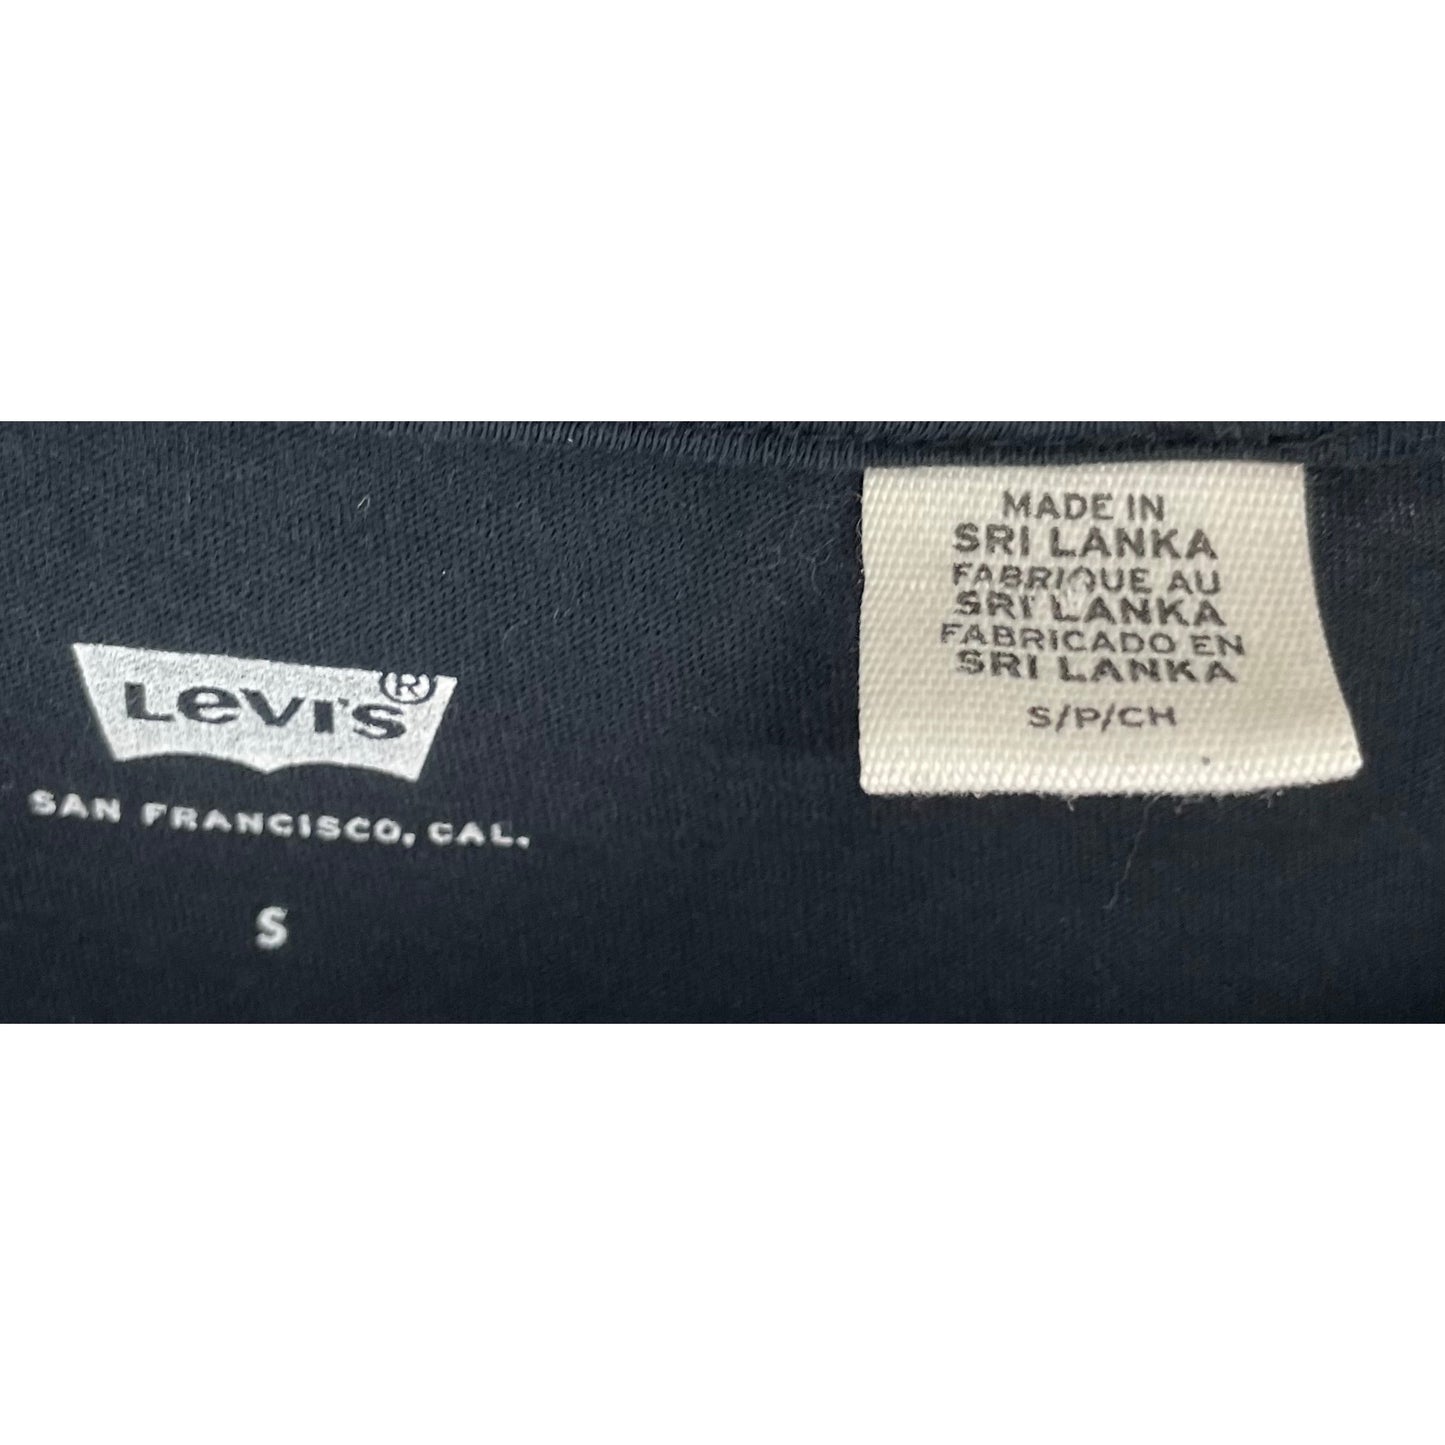 Levi's New York Women's Size Small Black & White T-Shirt